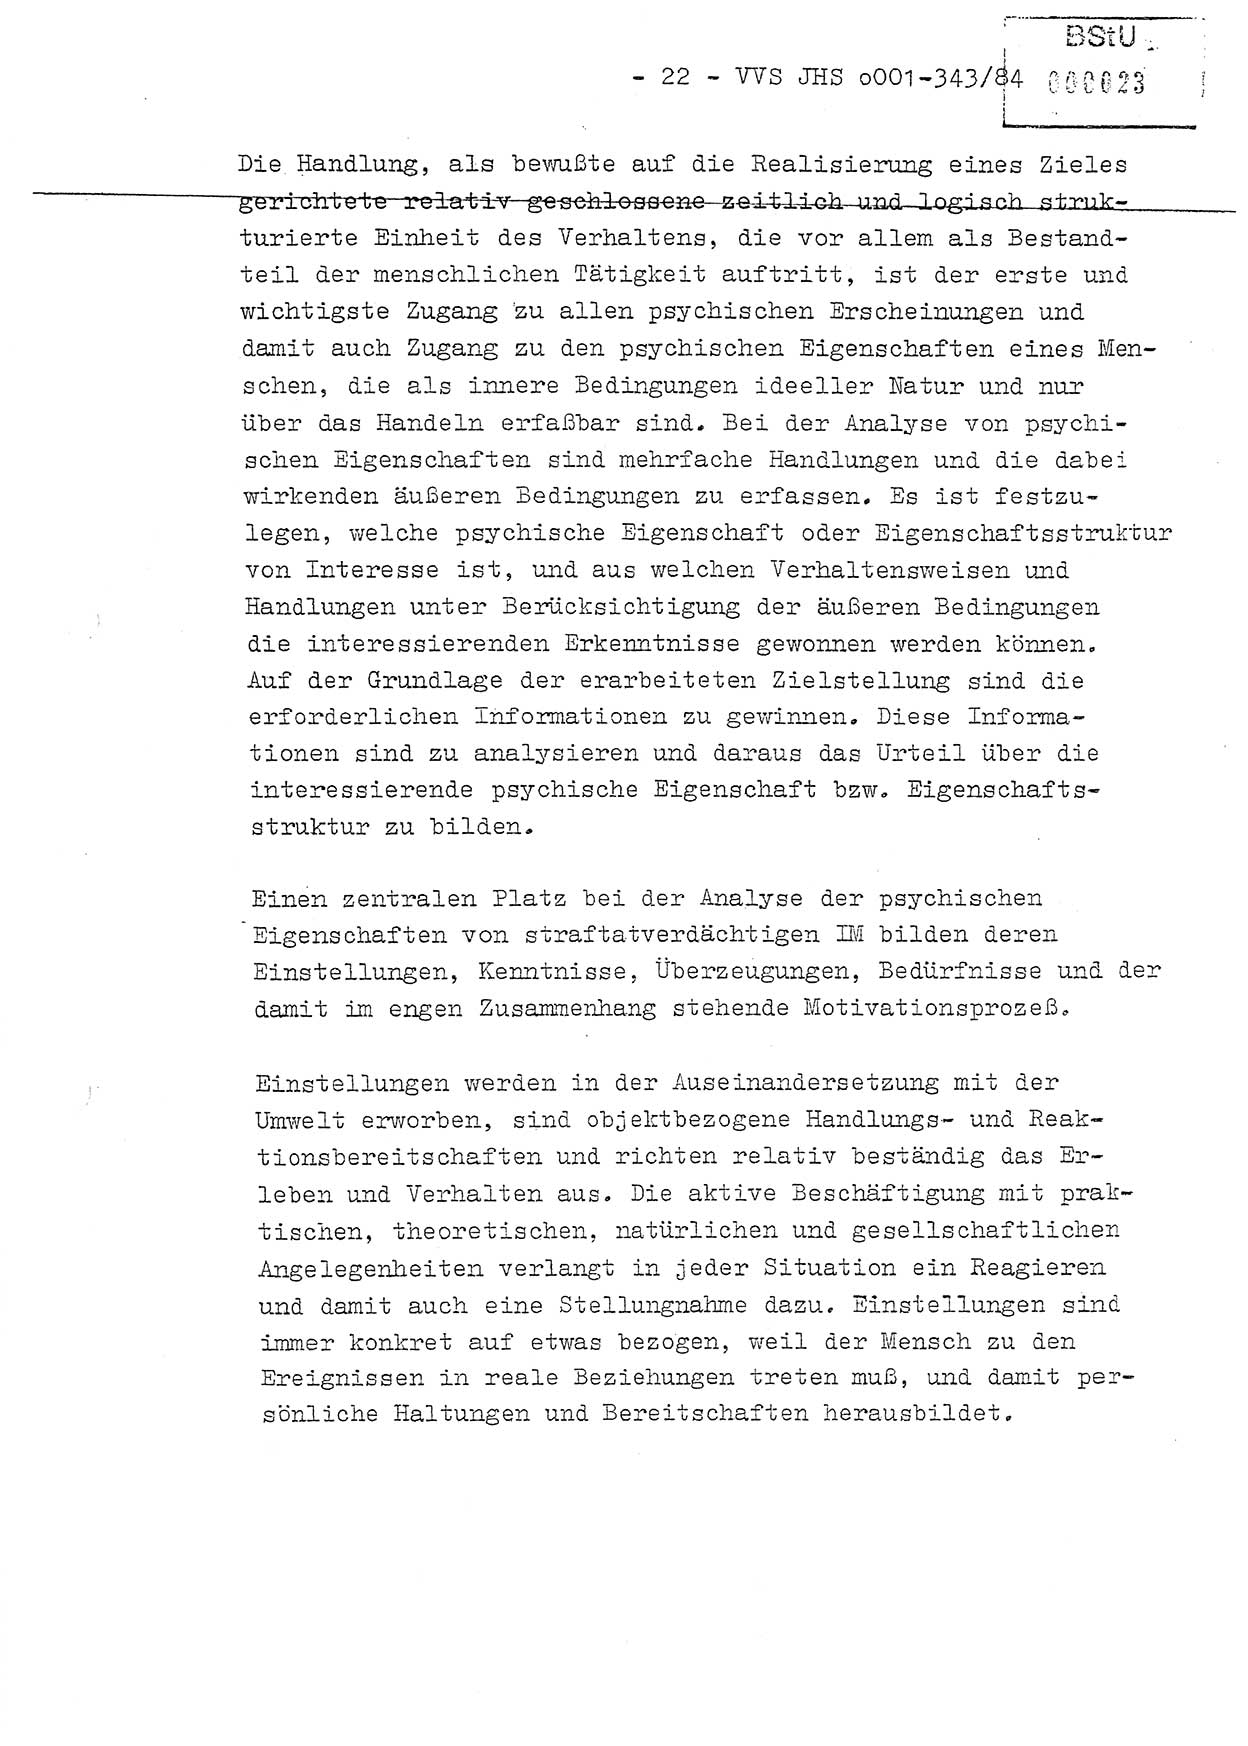 Diplomarbeit, Oberleutnant Bernd Michael (HA Ⅸ/5), Oberleutnant Peter Felber (HA IX/5), Ministerium für Staatssicherheit (MfS) [Deutsche Demokratische Republik (DDR)], Juristische Hochschule (JHS), Vertrauliche Verschlußsache (VVS) o001-343/84, Potsdam 1985, Seite 22 (Dipl.-Arb. MfS DDR JHS VVS o001-343/84 1985, S. 22)